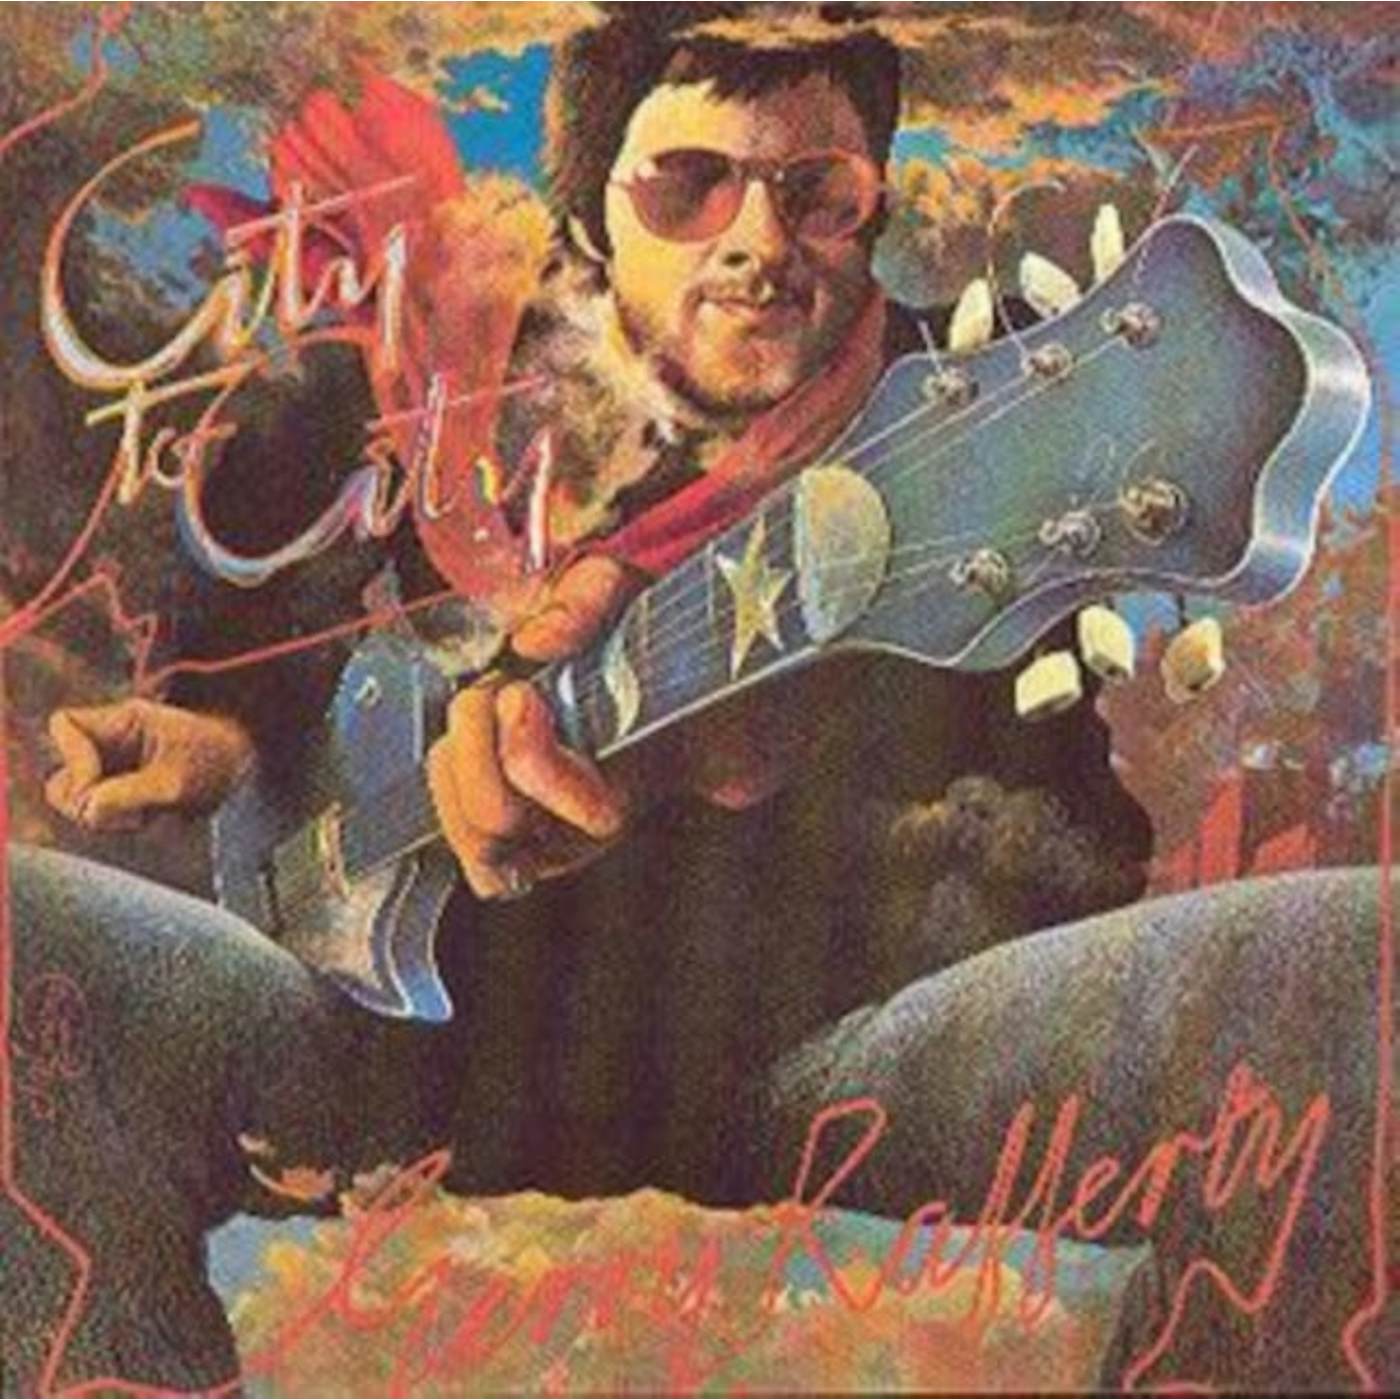 Gerry Rafferty CD - City To City